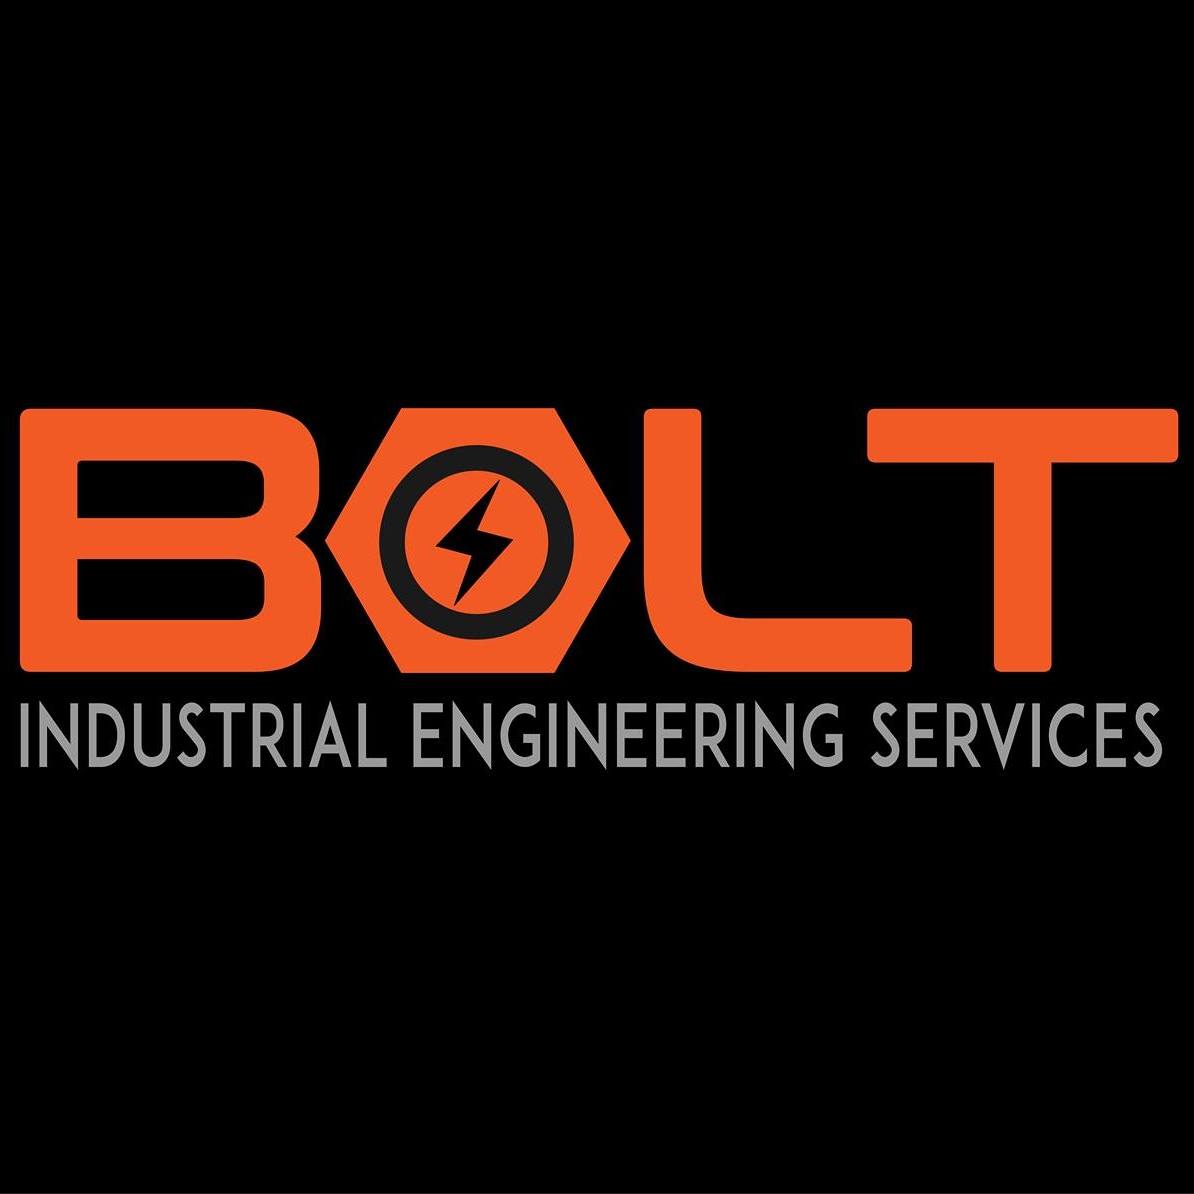 BOLT Industrial Engineering Services Ltd